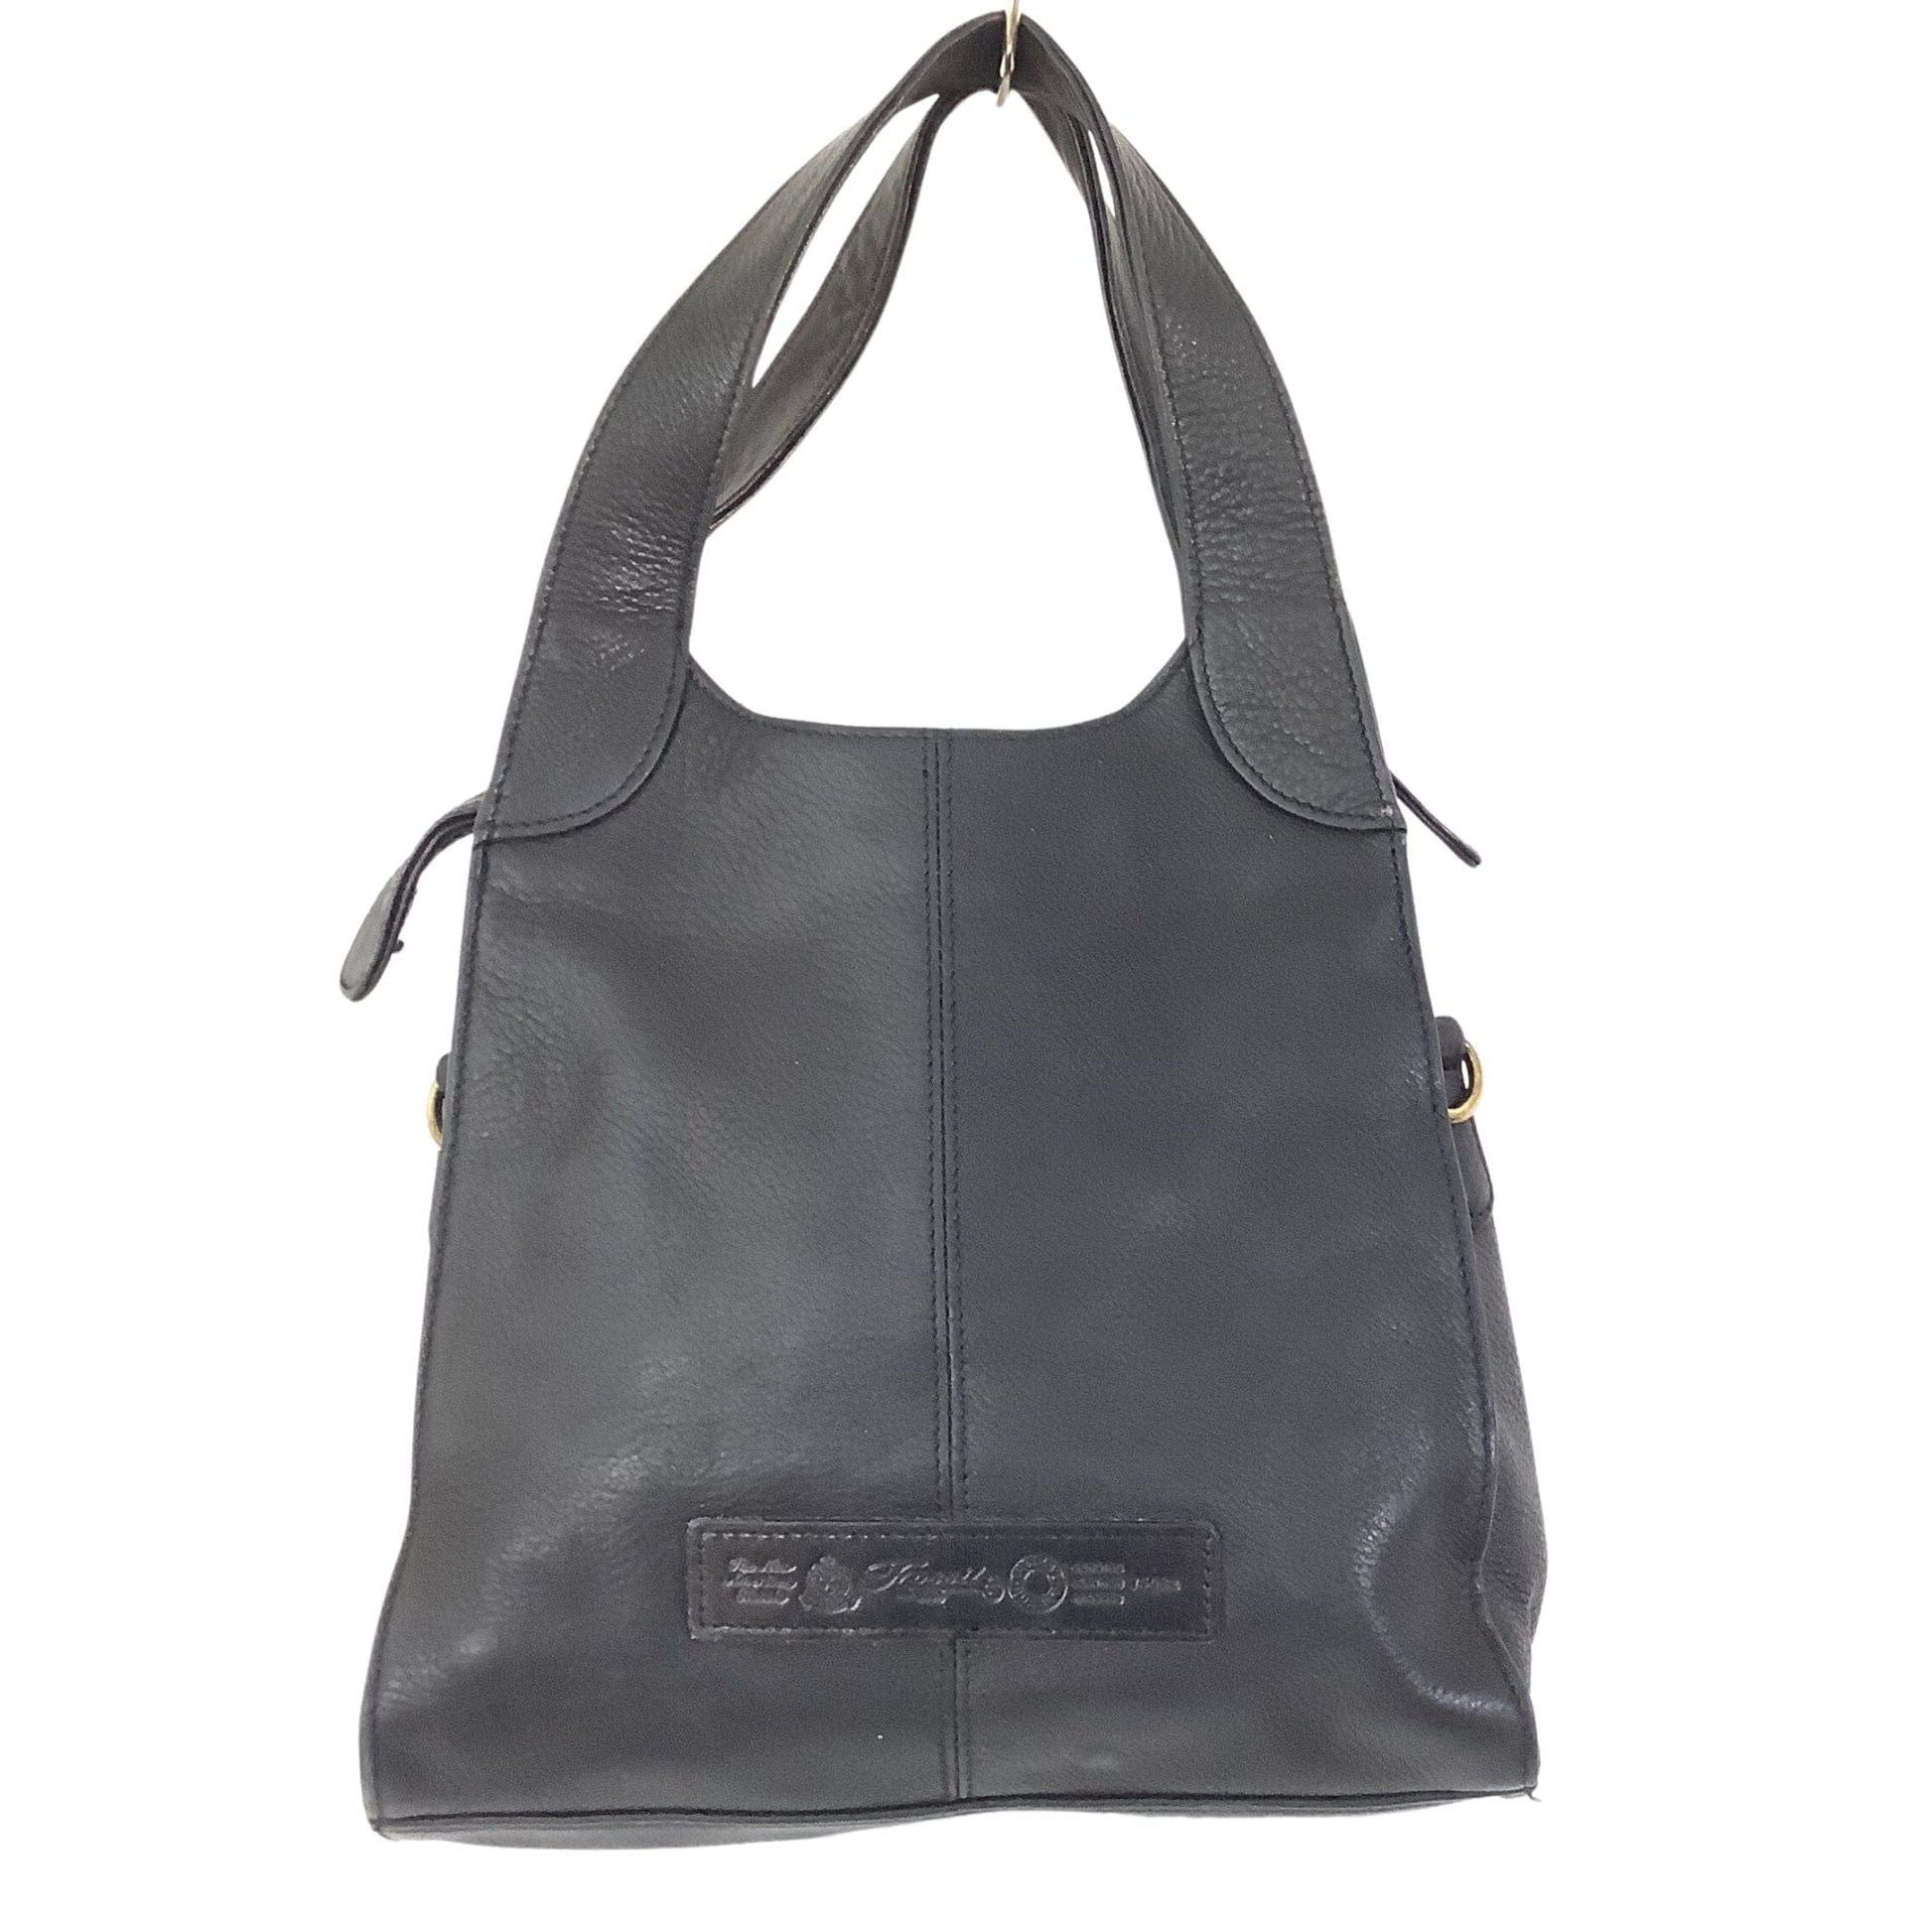 Pebbled Leather Fossil Bag Black / Leather / Vintage 1980s